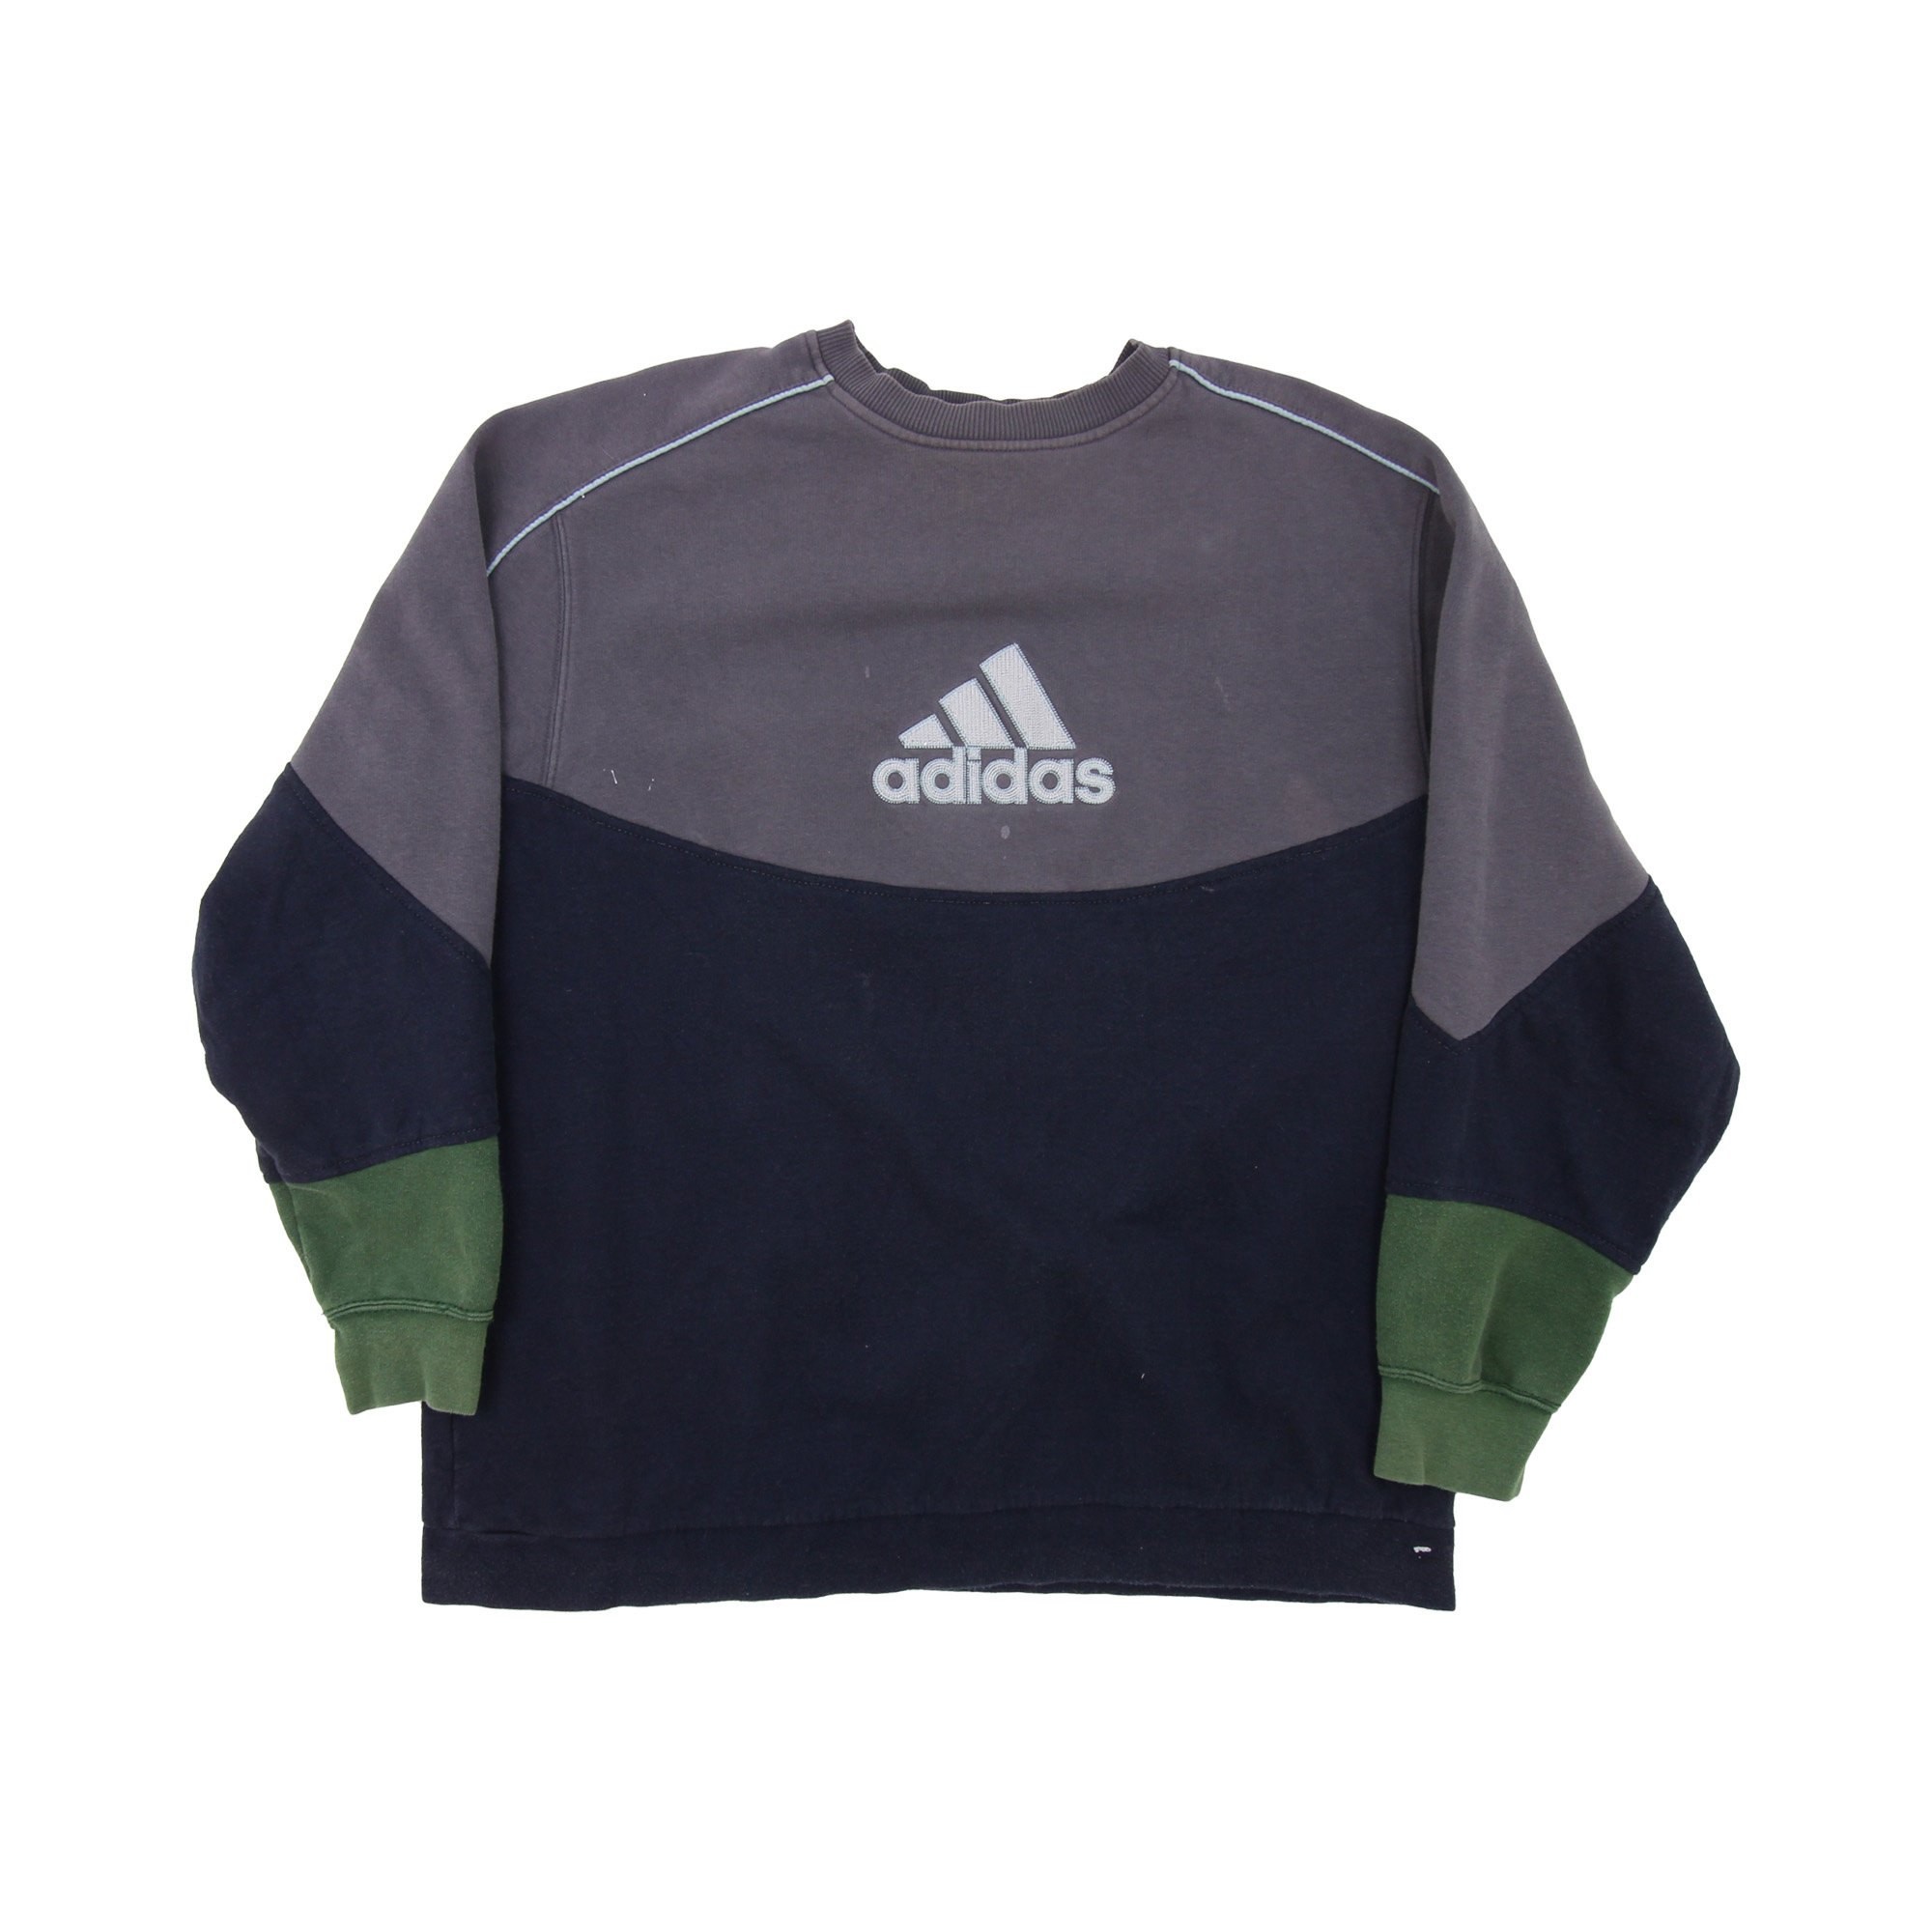 Adidas Rework Sweatshirt -  L/XL